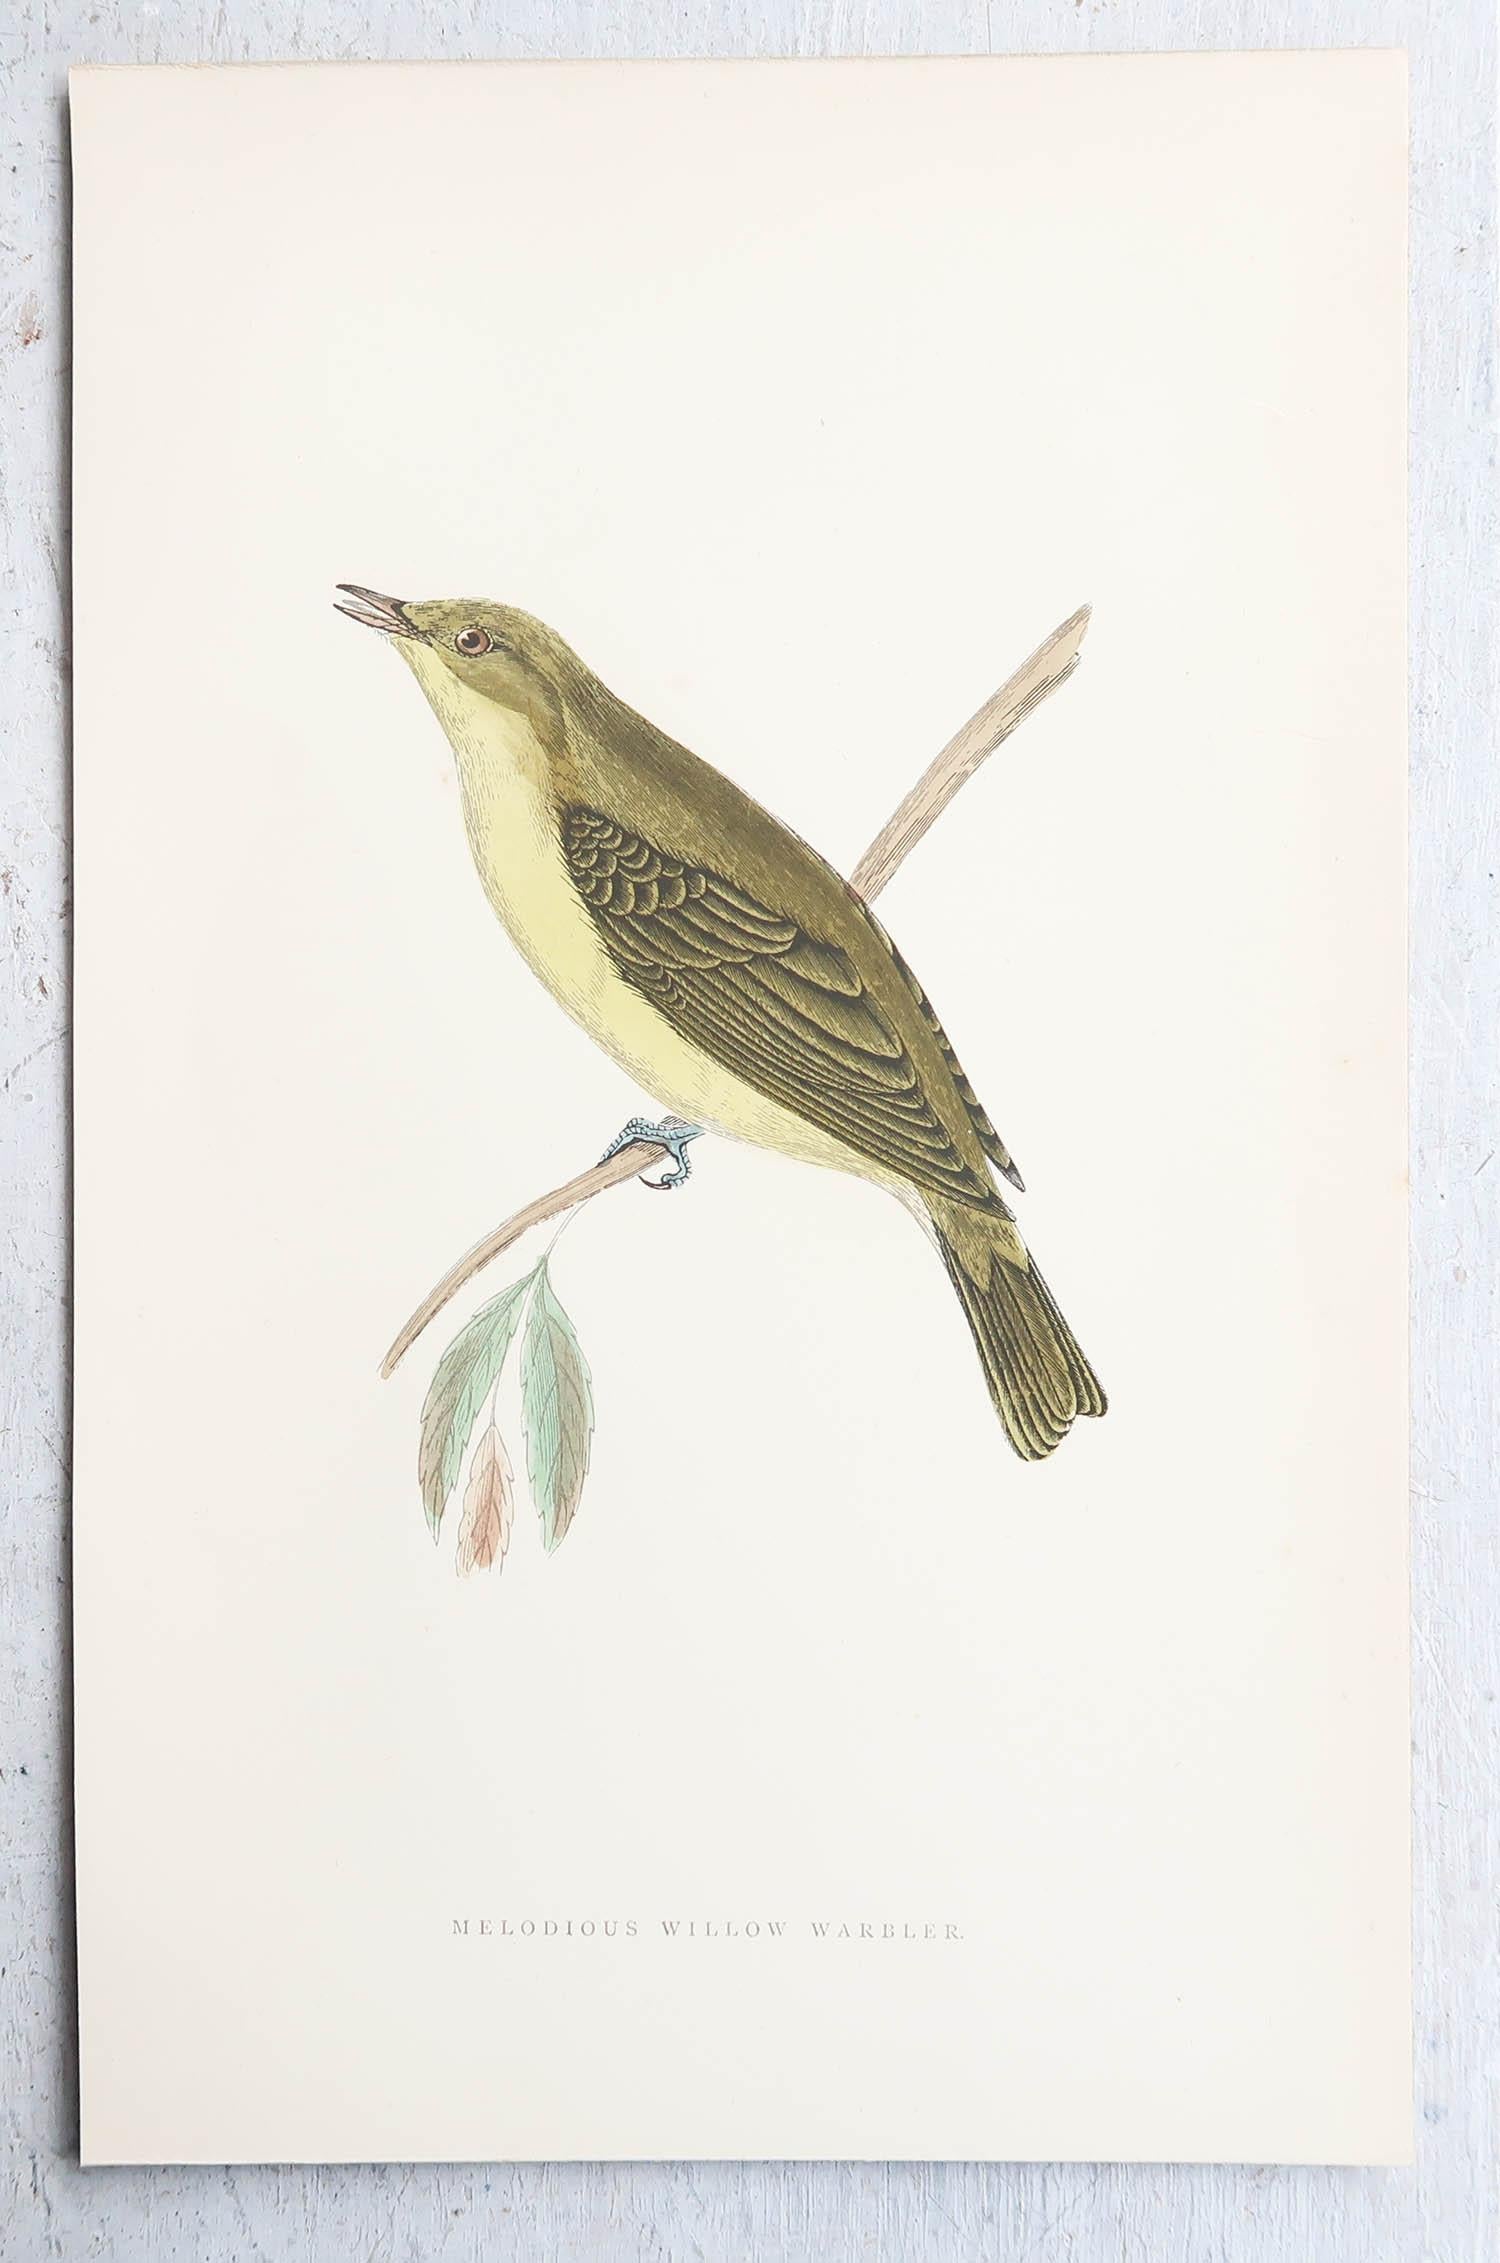 Folk Art Original Antique Print of a Melodious Willow Warbler, circa 1880, 'Unframed' For Sale